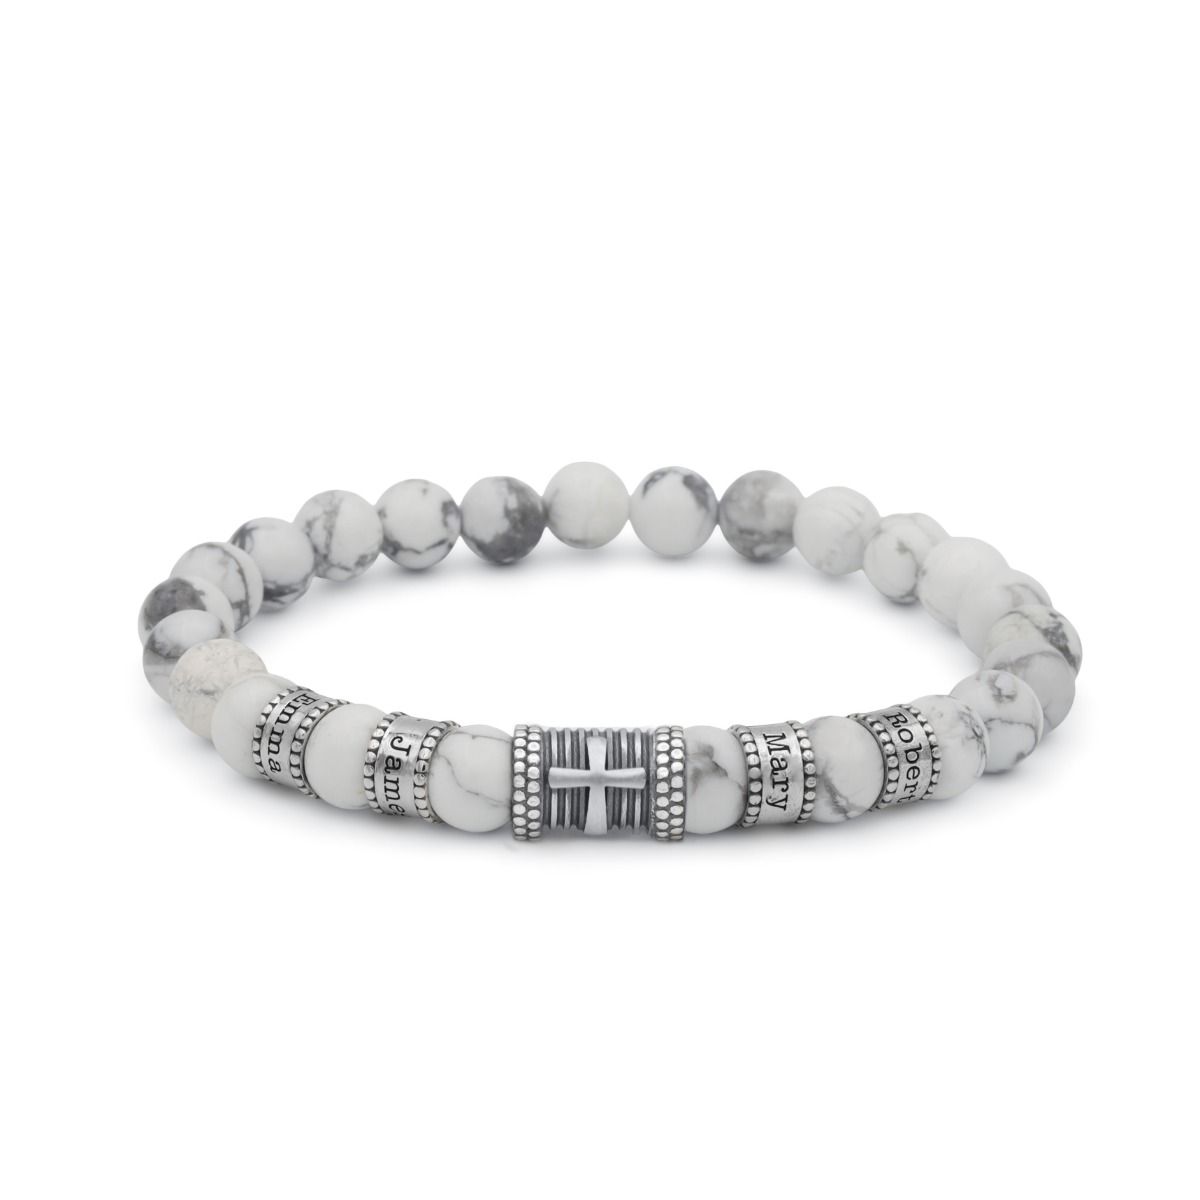 Jewelry Presents - Cross Women Name Bracelet with Howlite Stones